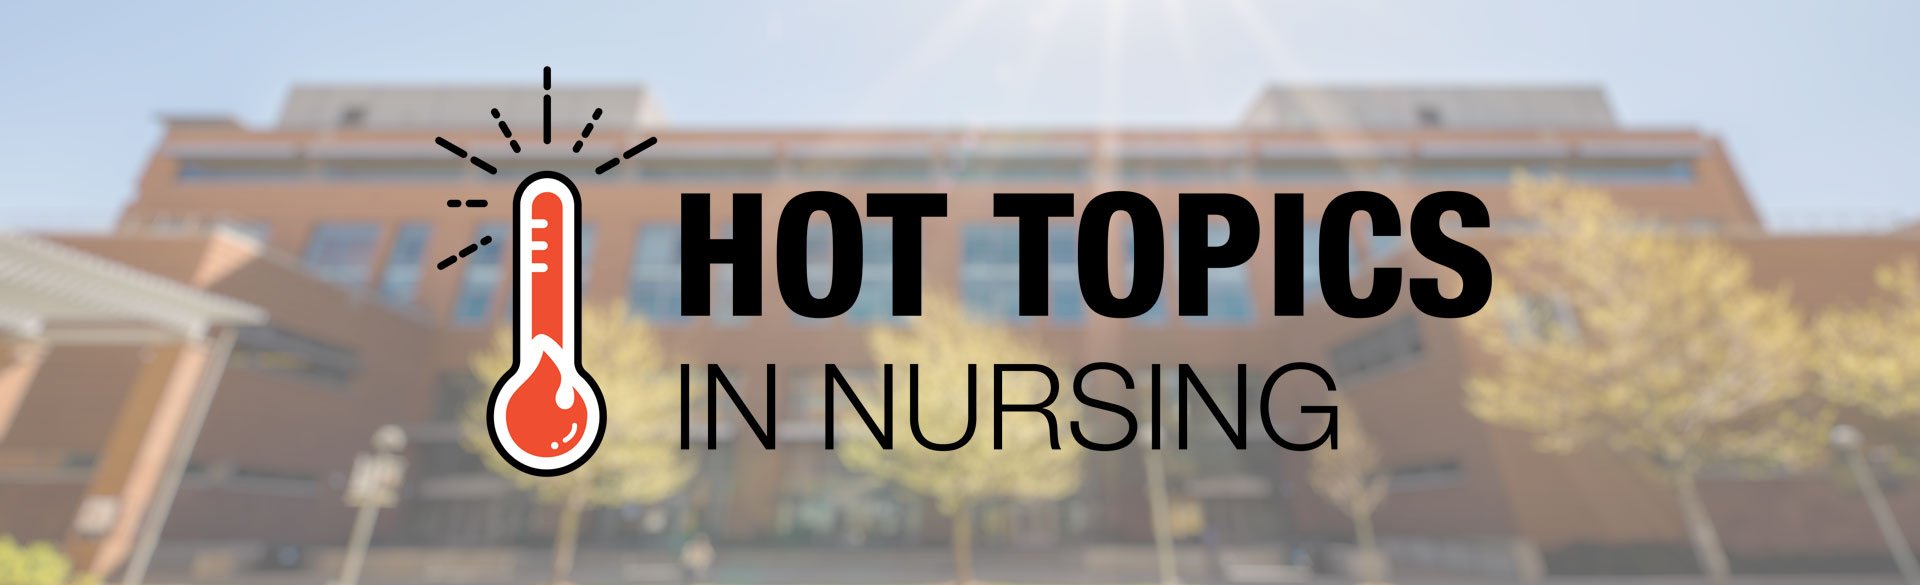 Hot Topics in Nursing - Getting Licensed Post Graduation